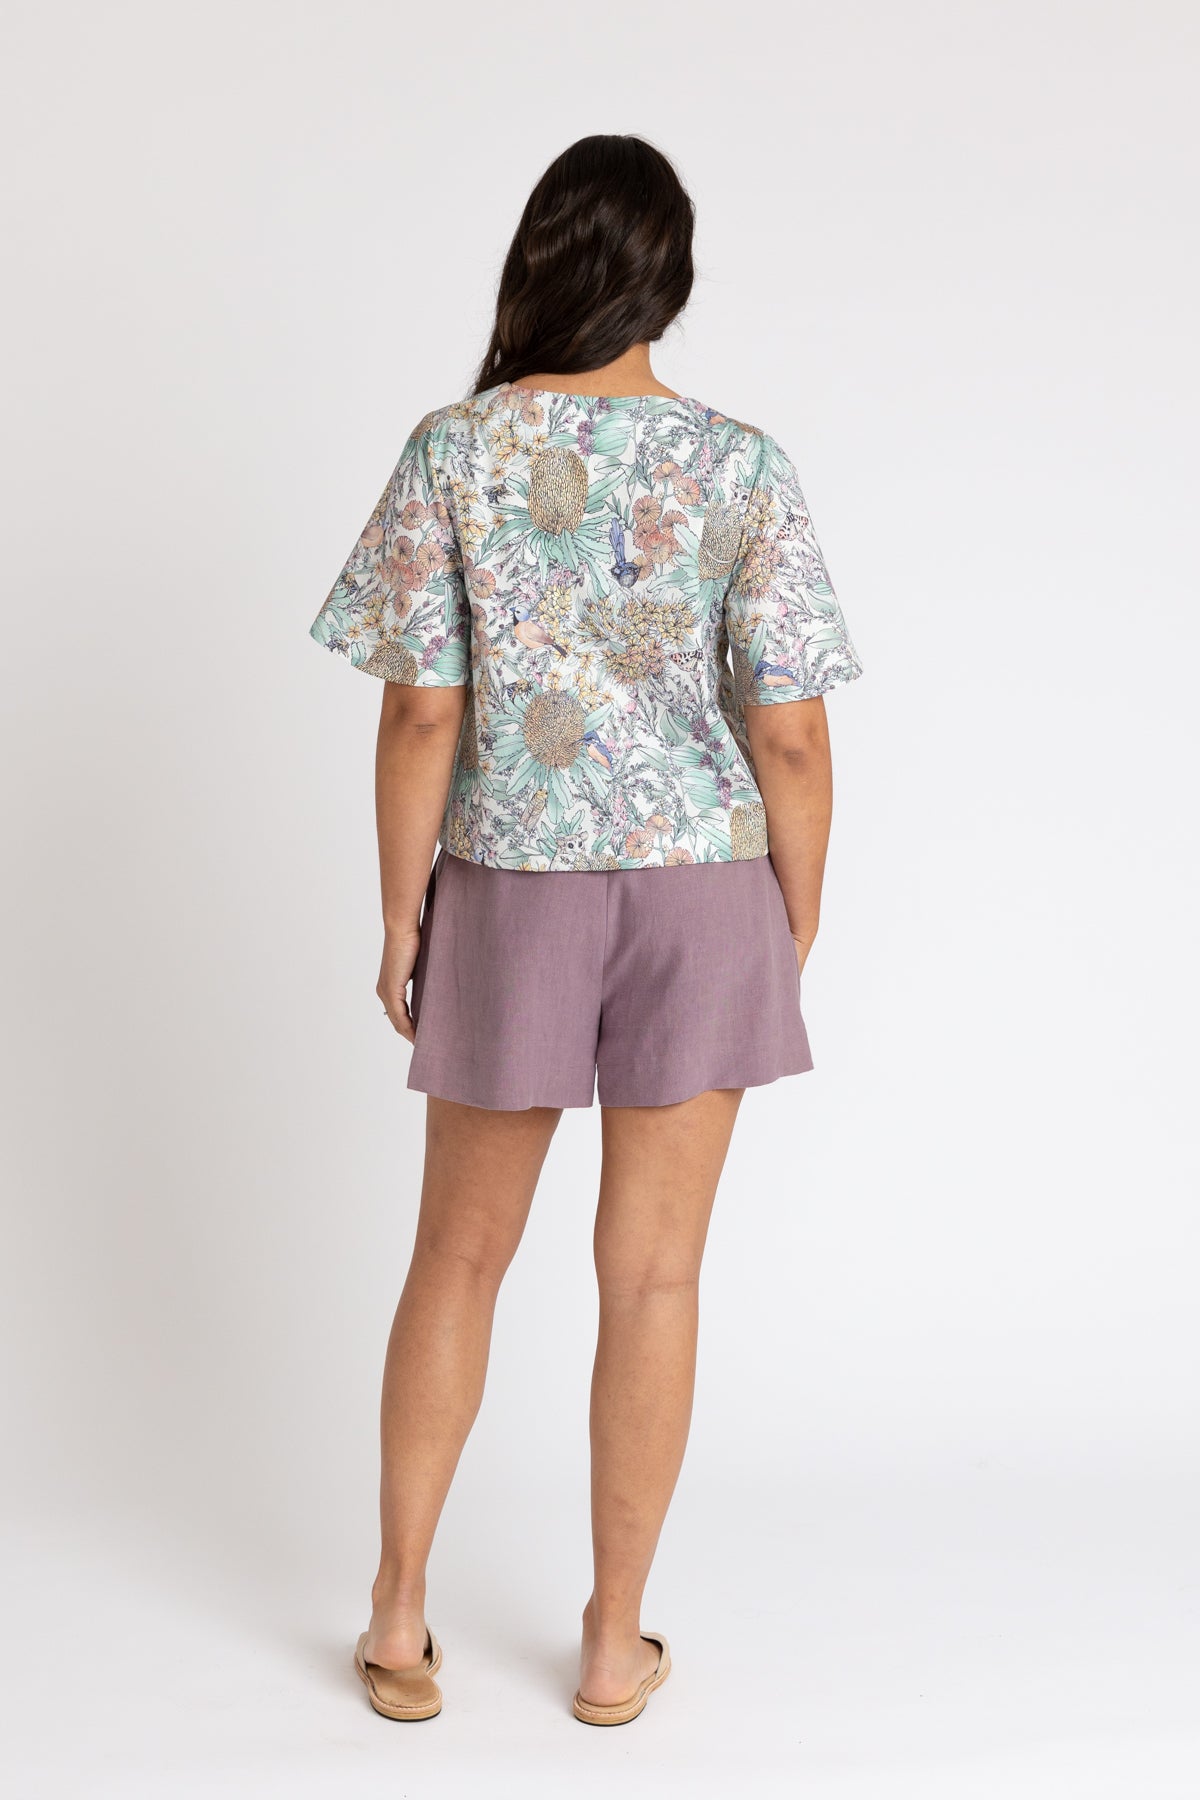 Protea Capsule Wardrobe - Sewing Pattern | Megan Nielsen